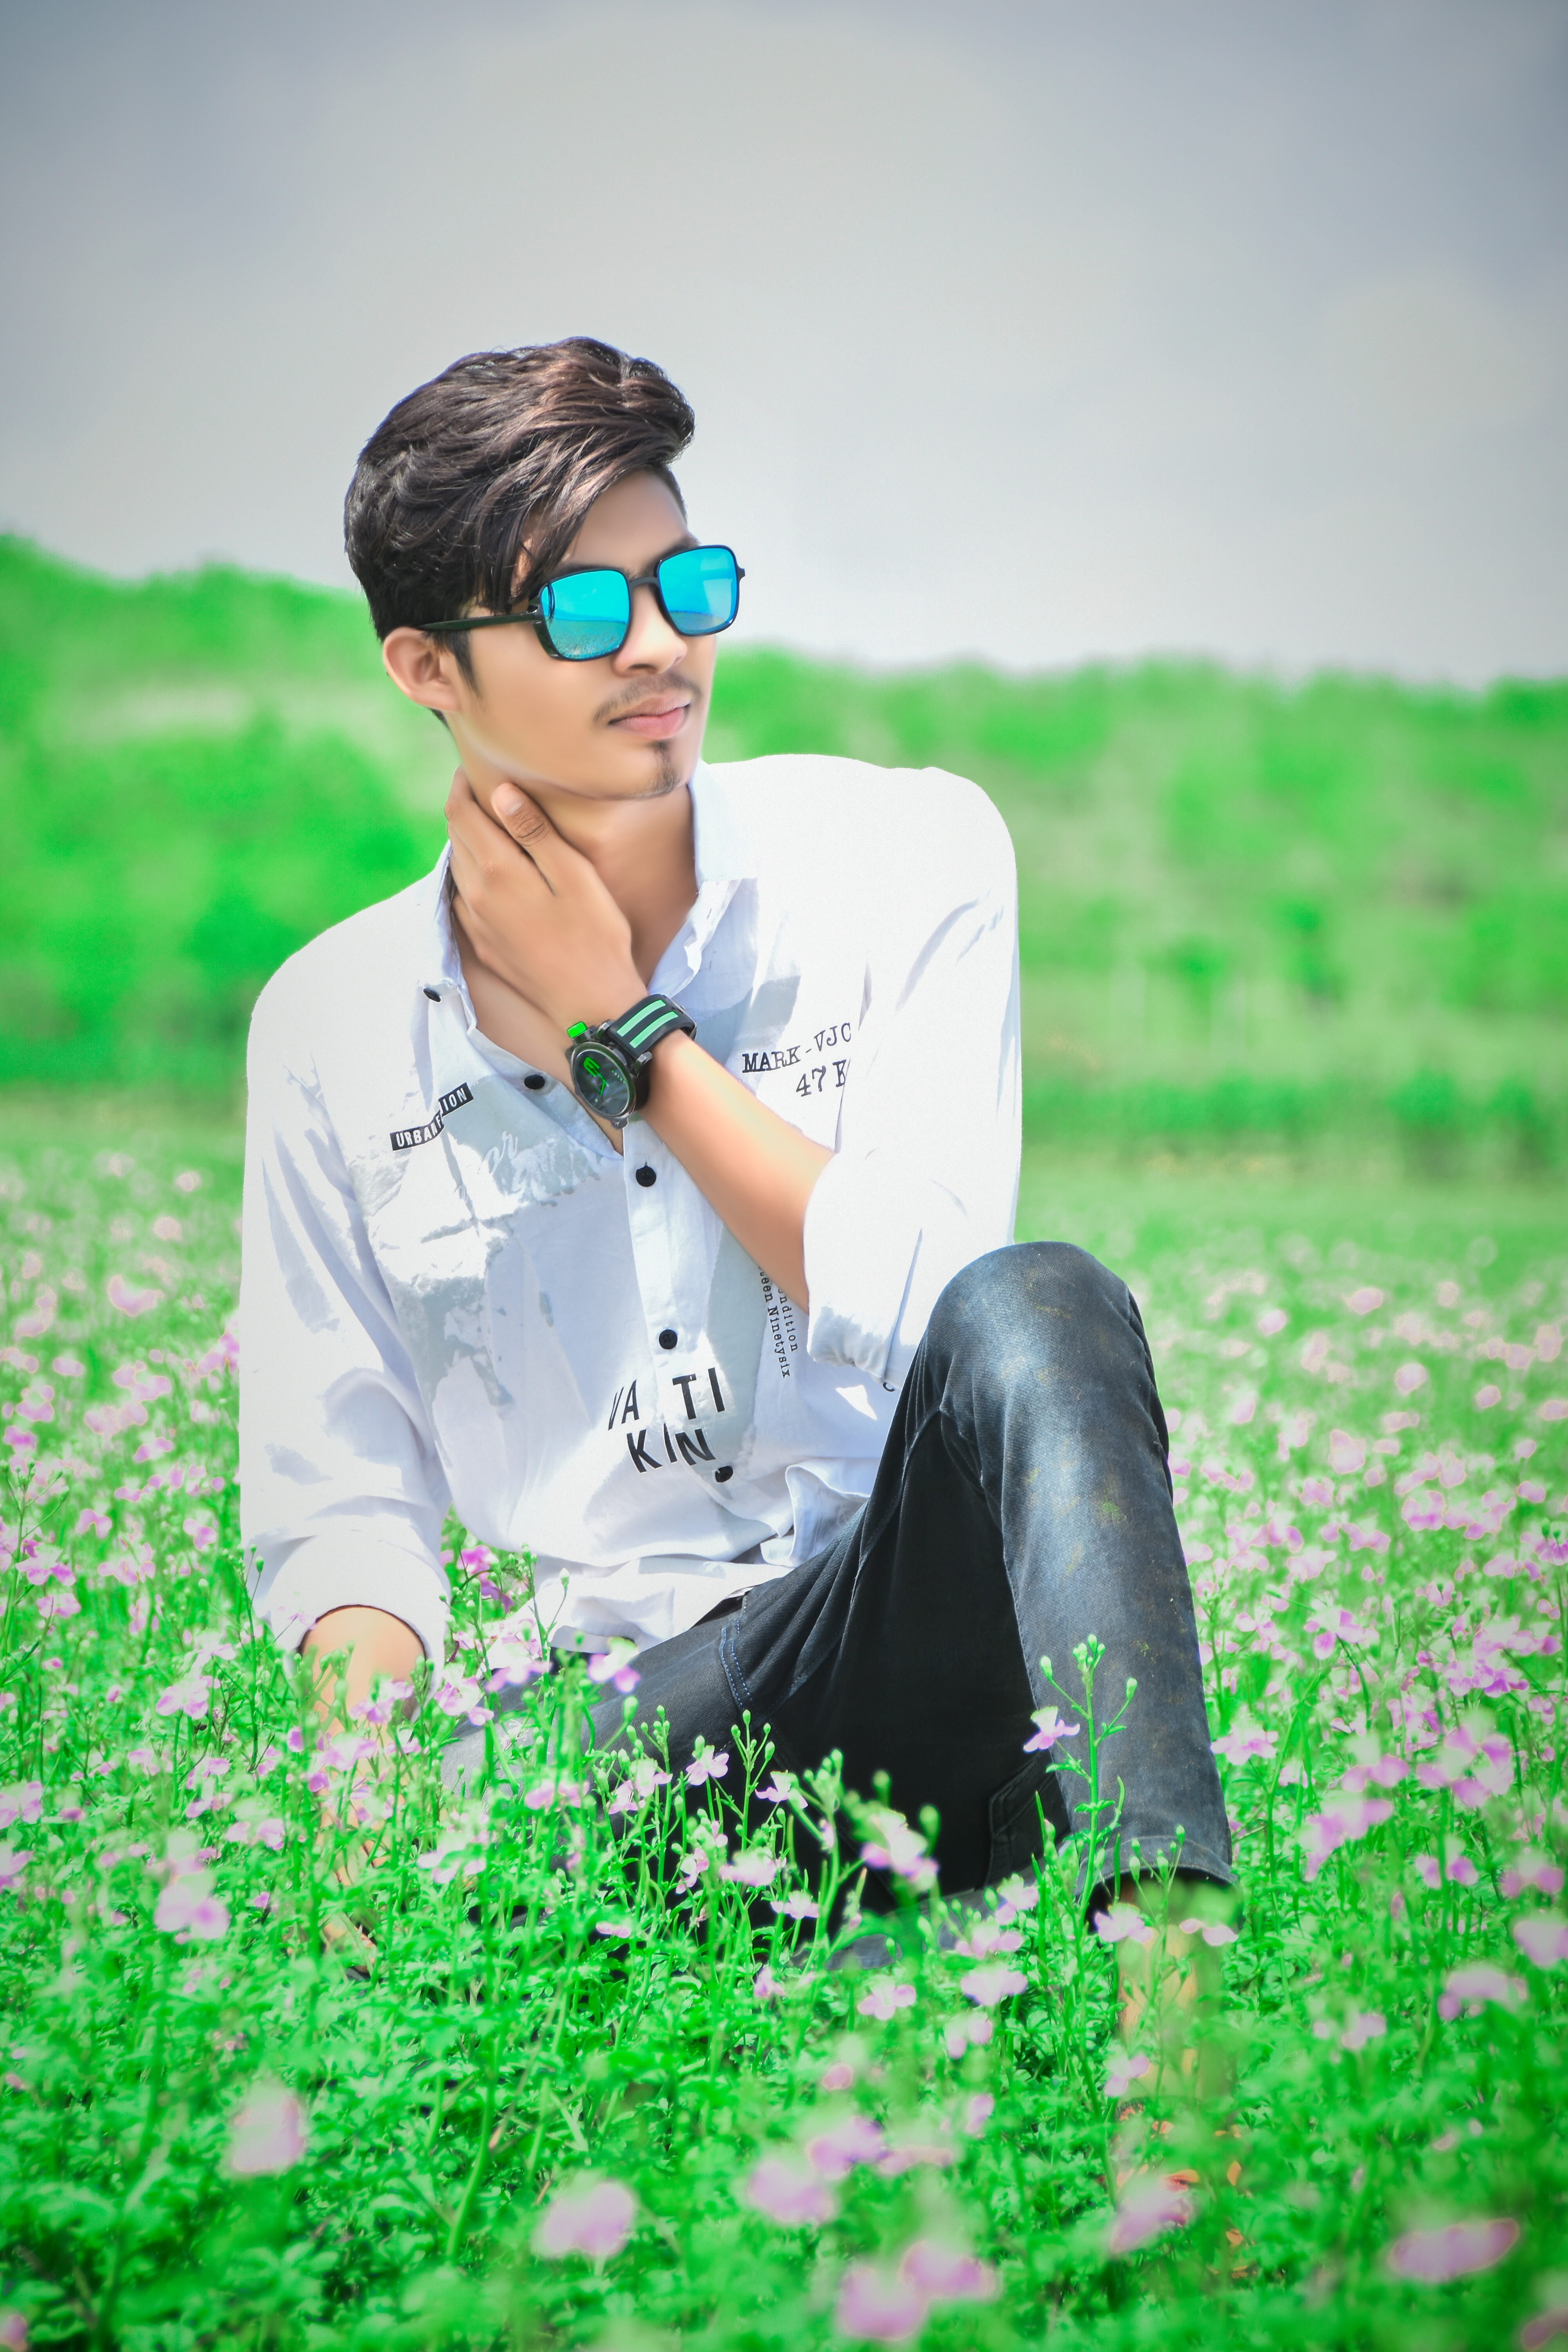 A boy sitting on grass flowers